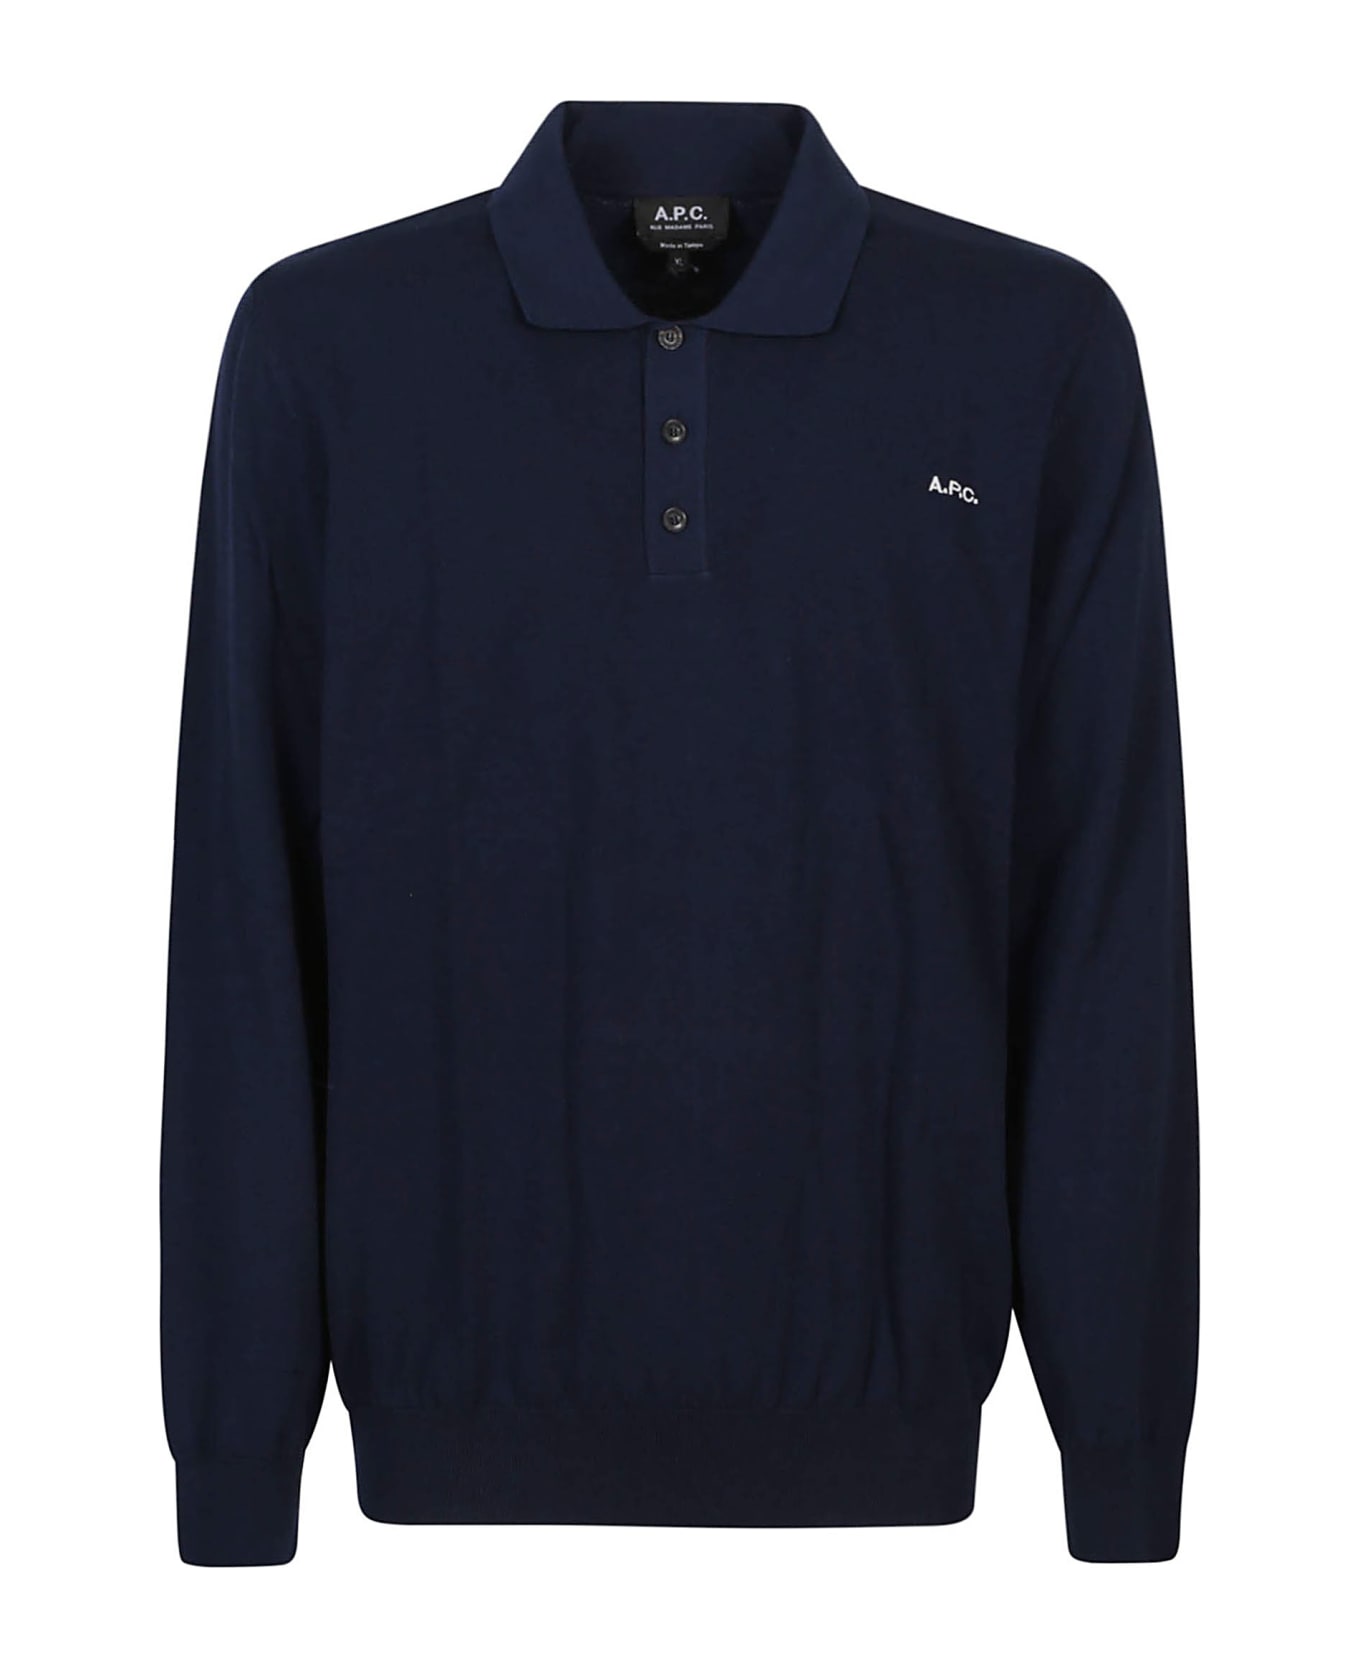 A.P.C. Blaise Long Sleeve Polo Shirt - Iak Dark Navy ポロシャツ